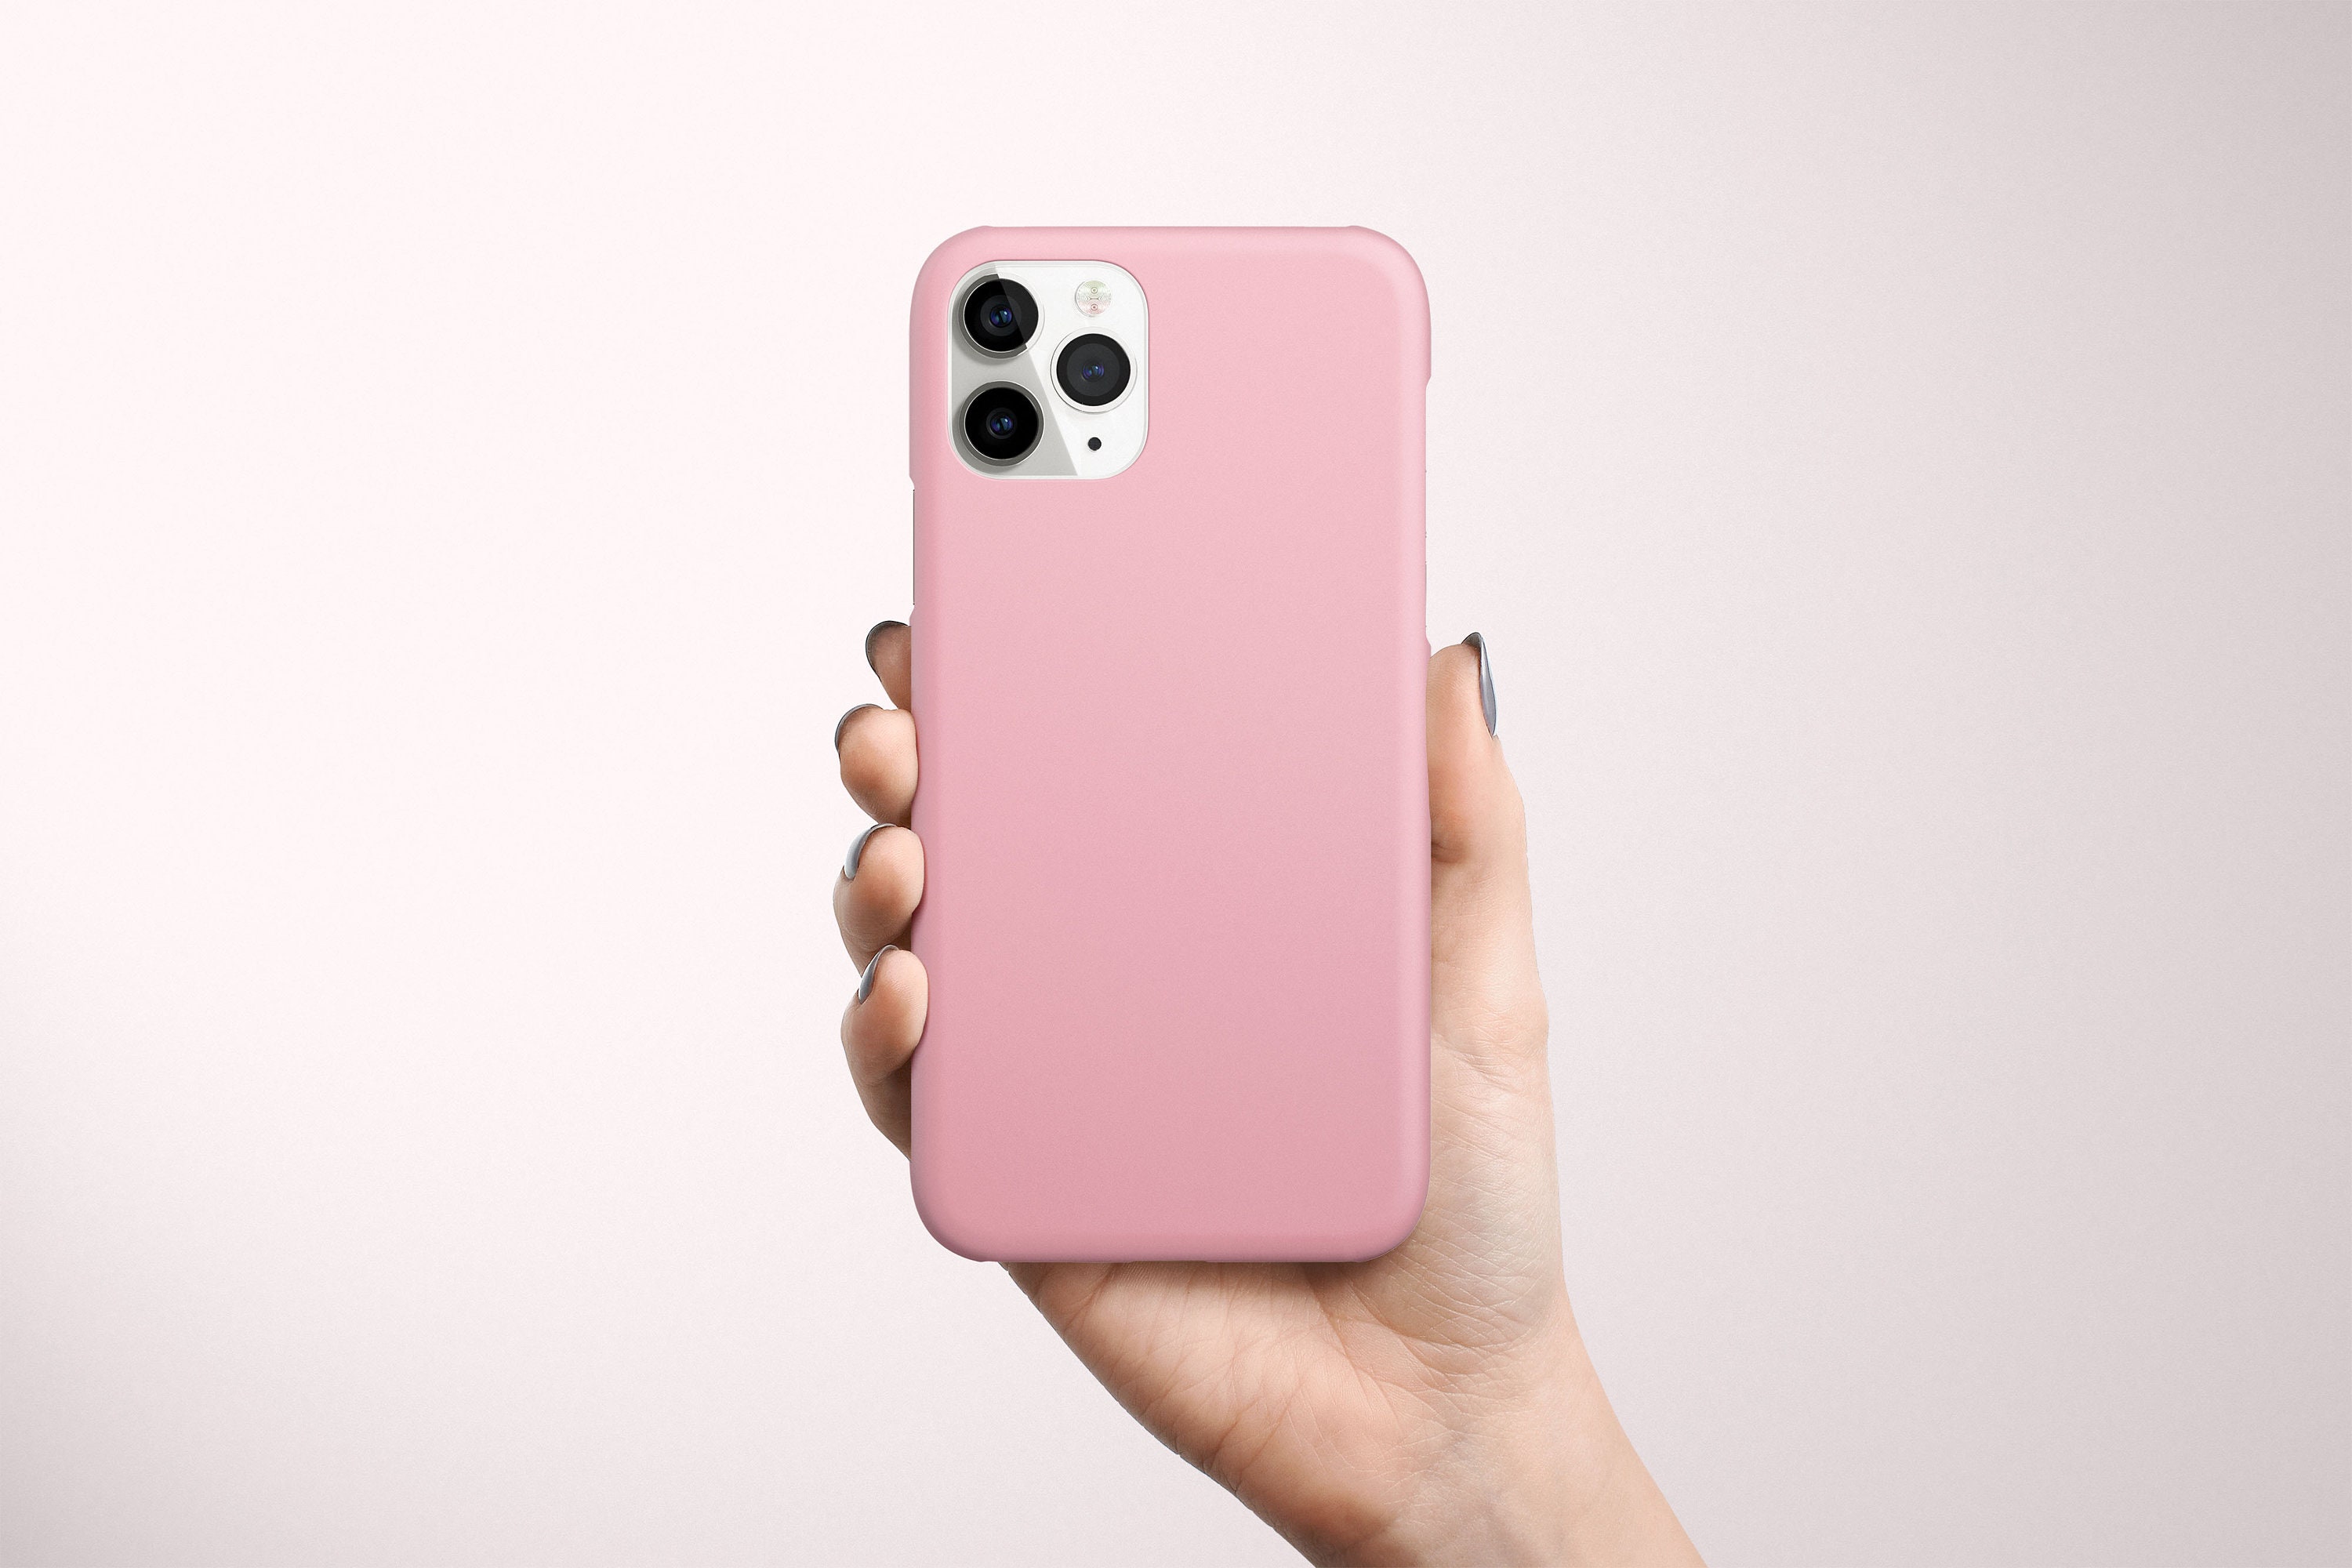 Pink Snap iPhone Case Aesthetic Phone Case Kawaii Phone | Etsy